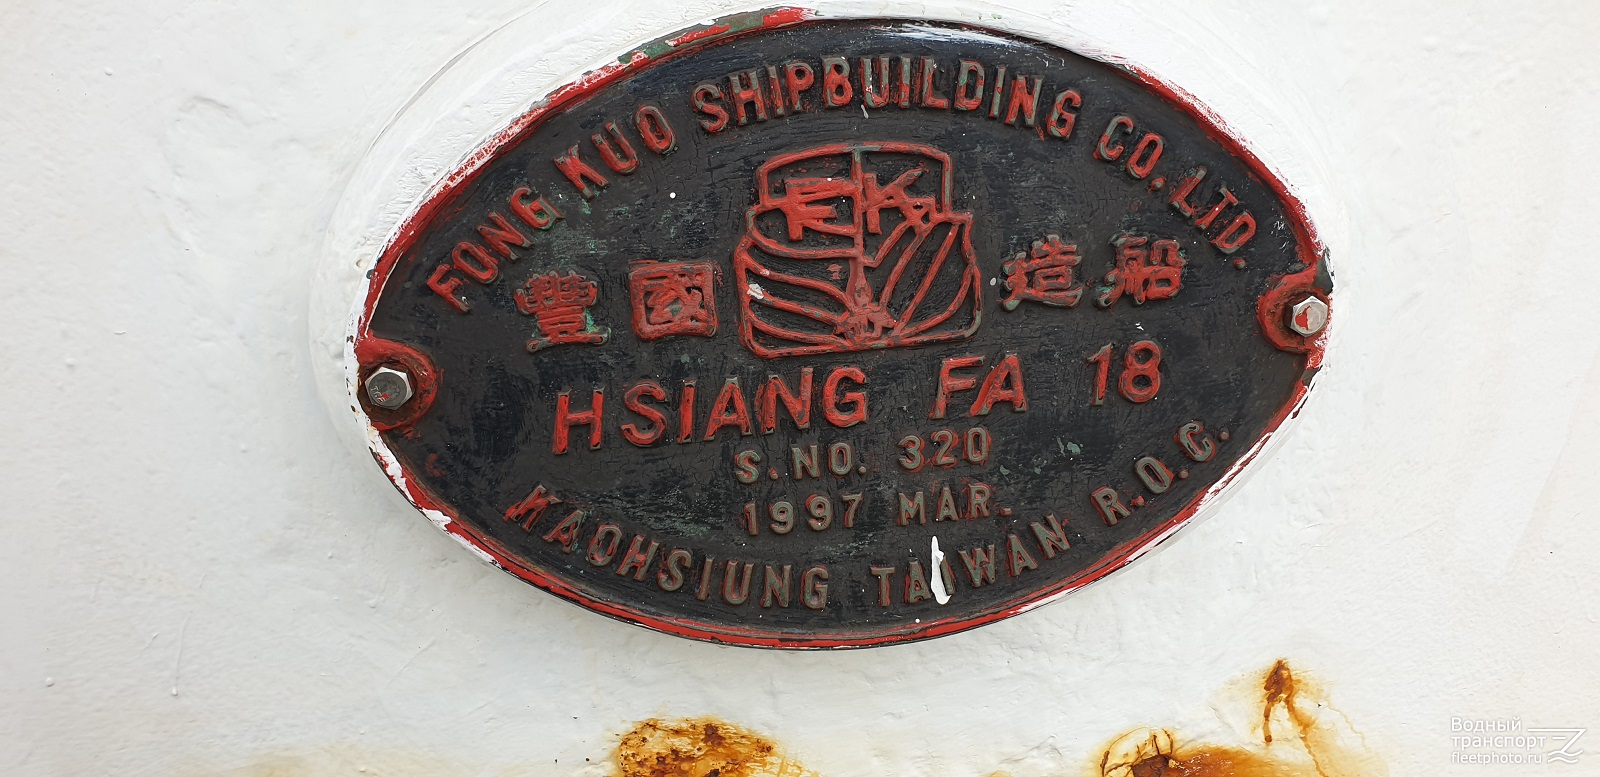 Hsiang Fa No. 18. Закладные доски и заводские таблички